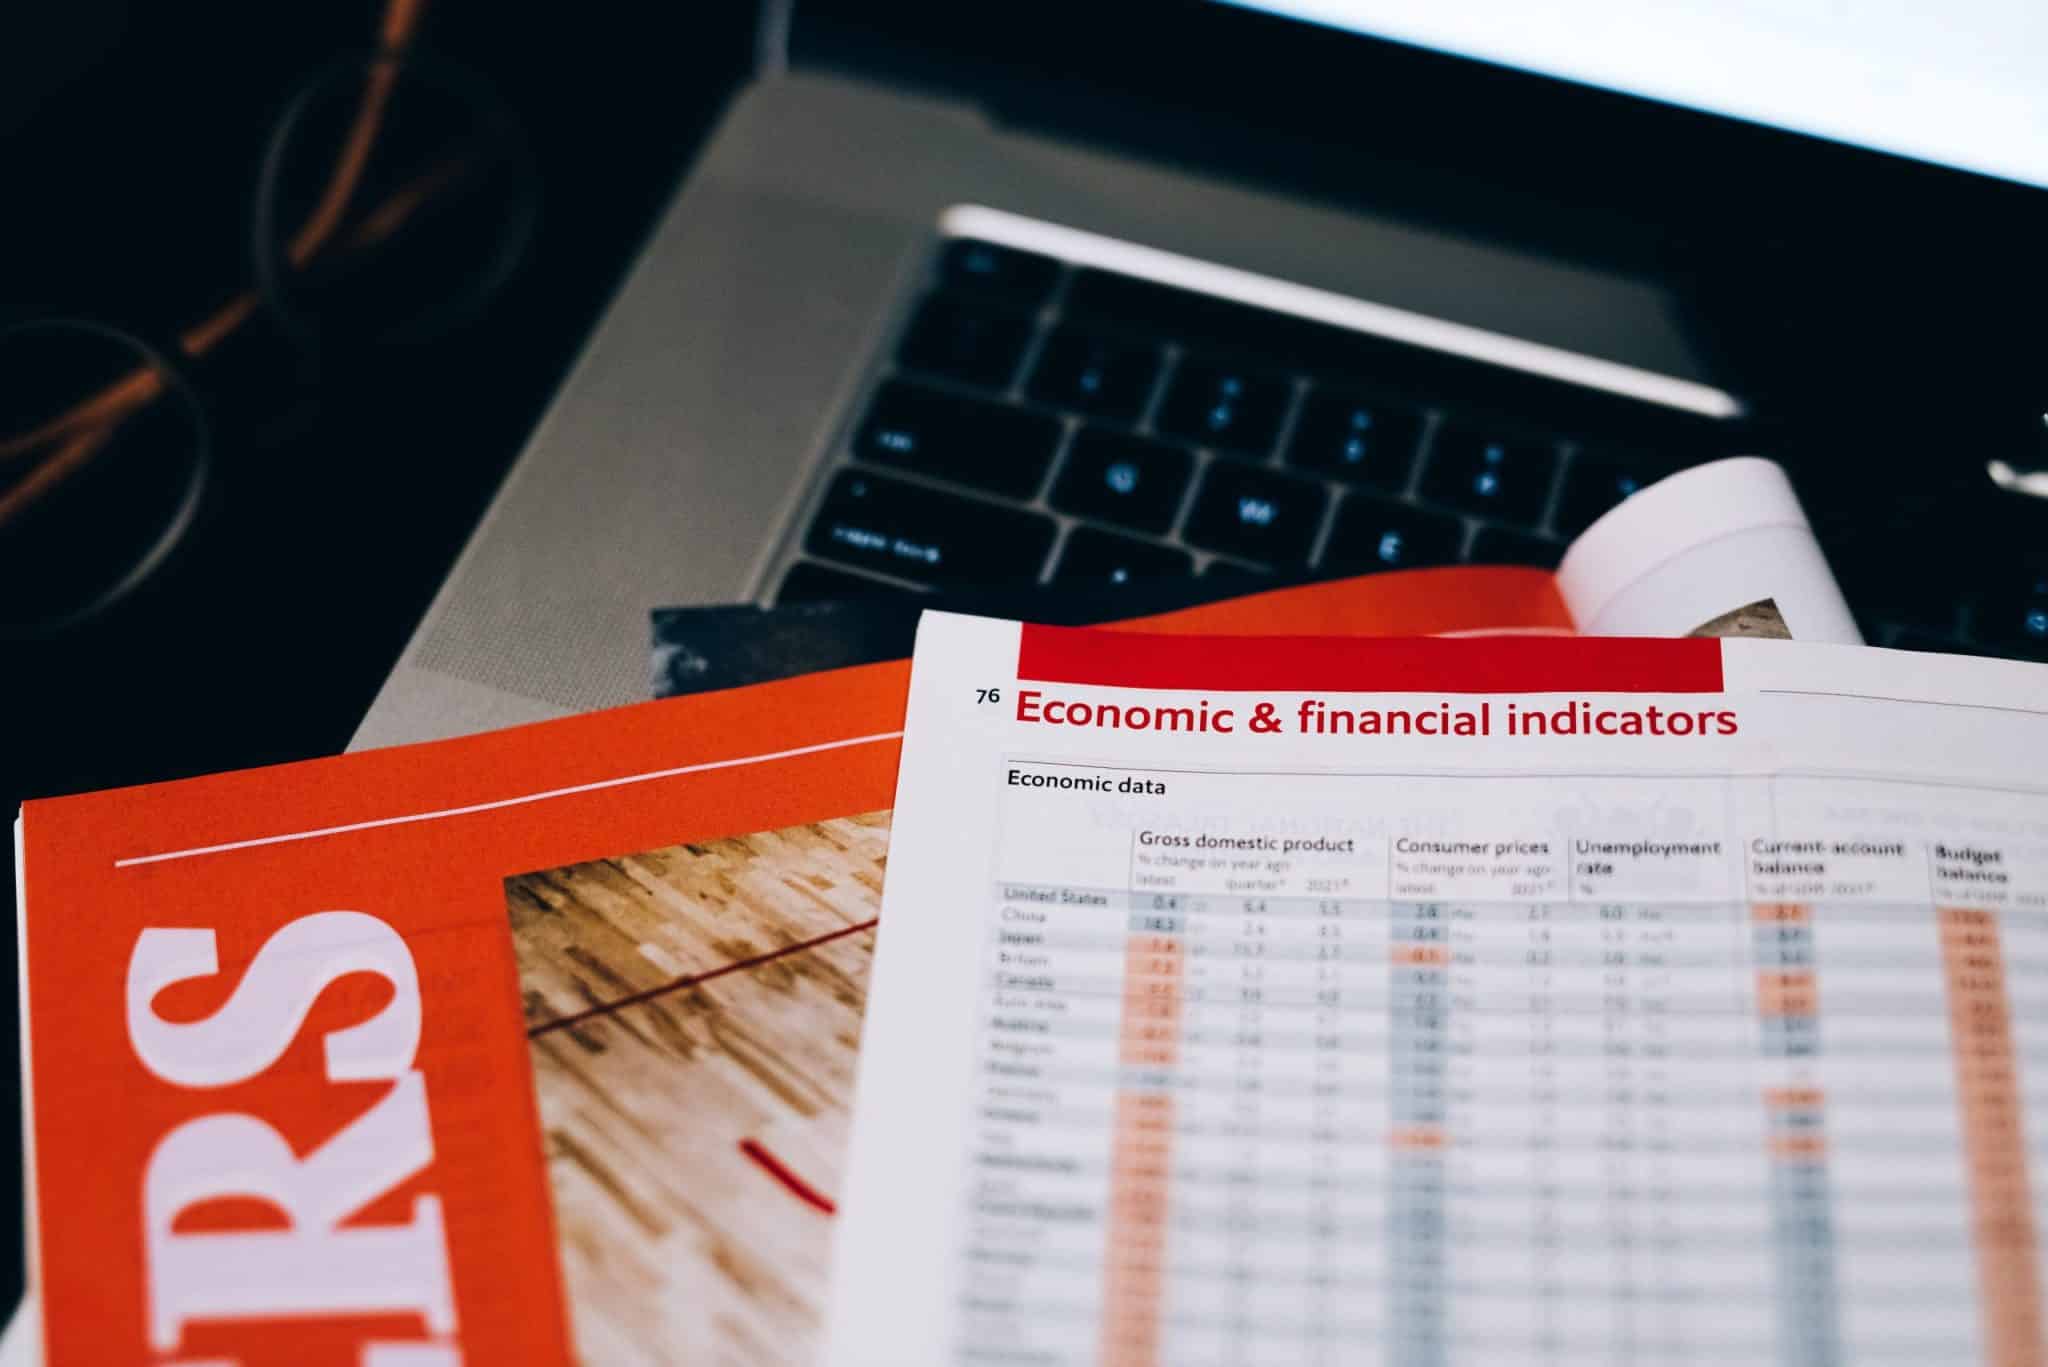 stock-photo-of-financial-trade-magazine